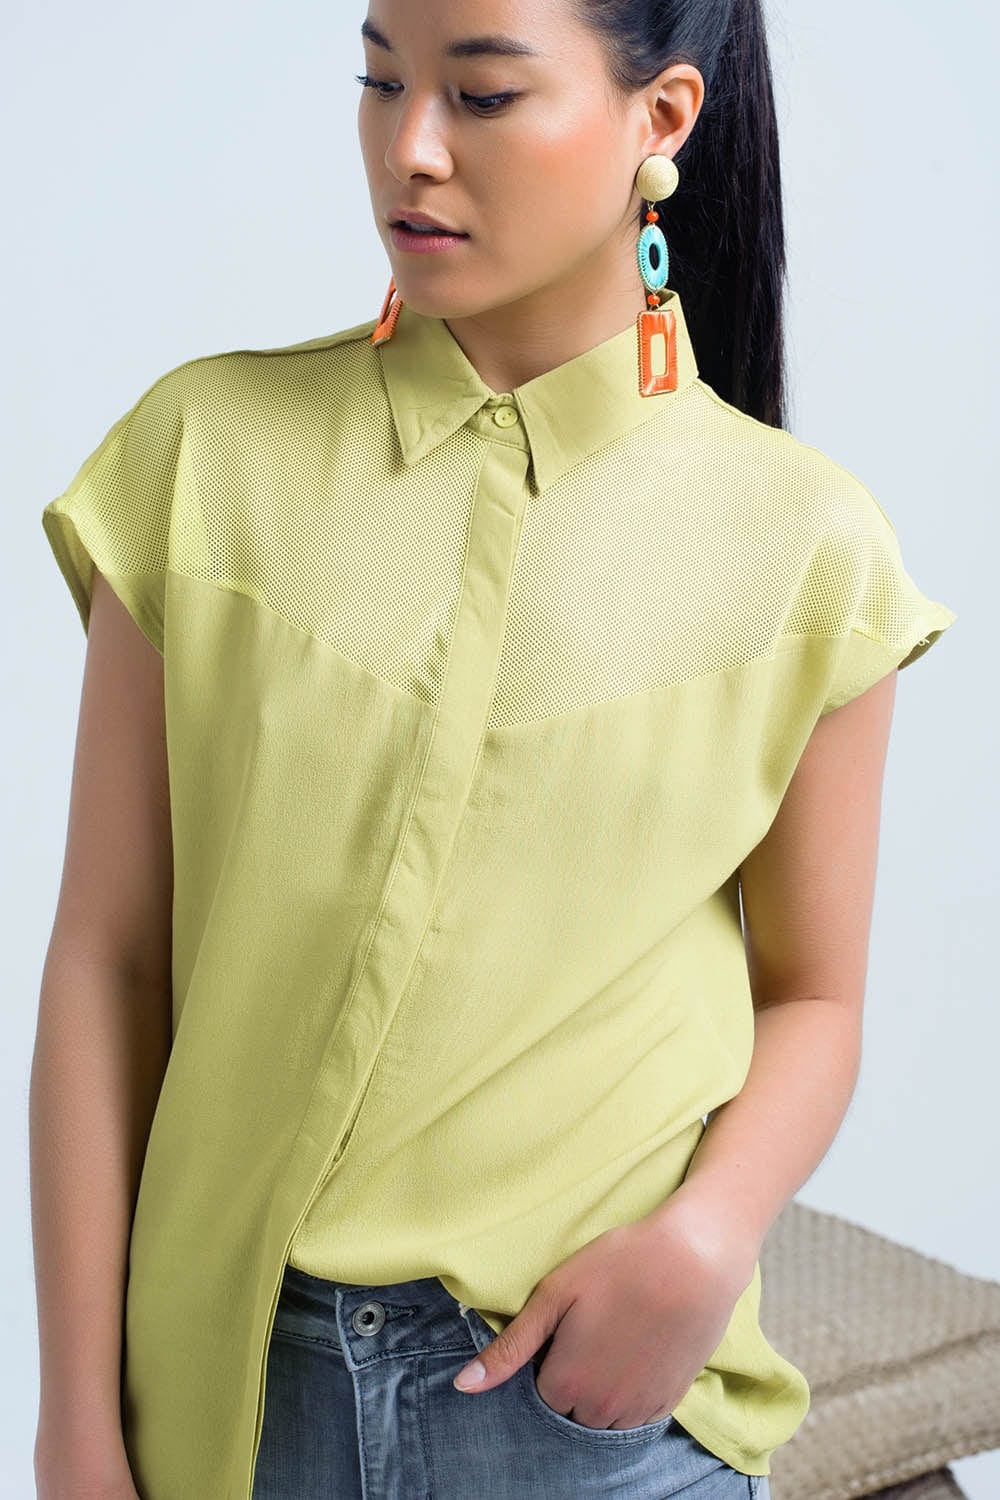 Q2 Women's Blouse Yellow shirt with mesh detail